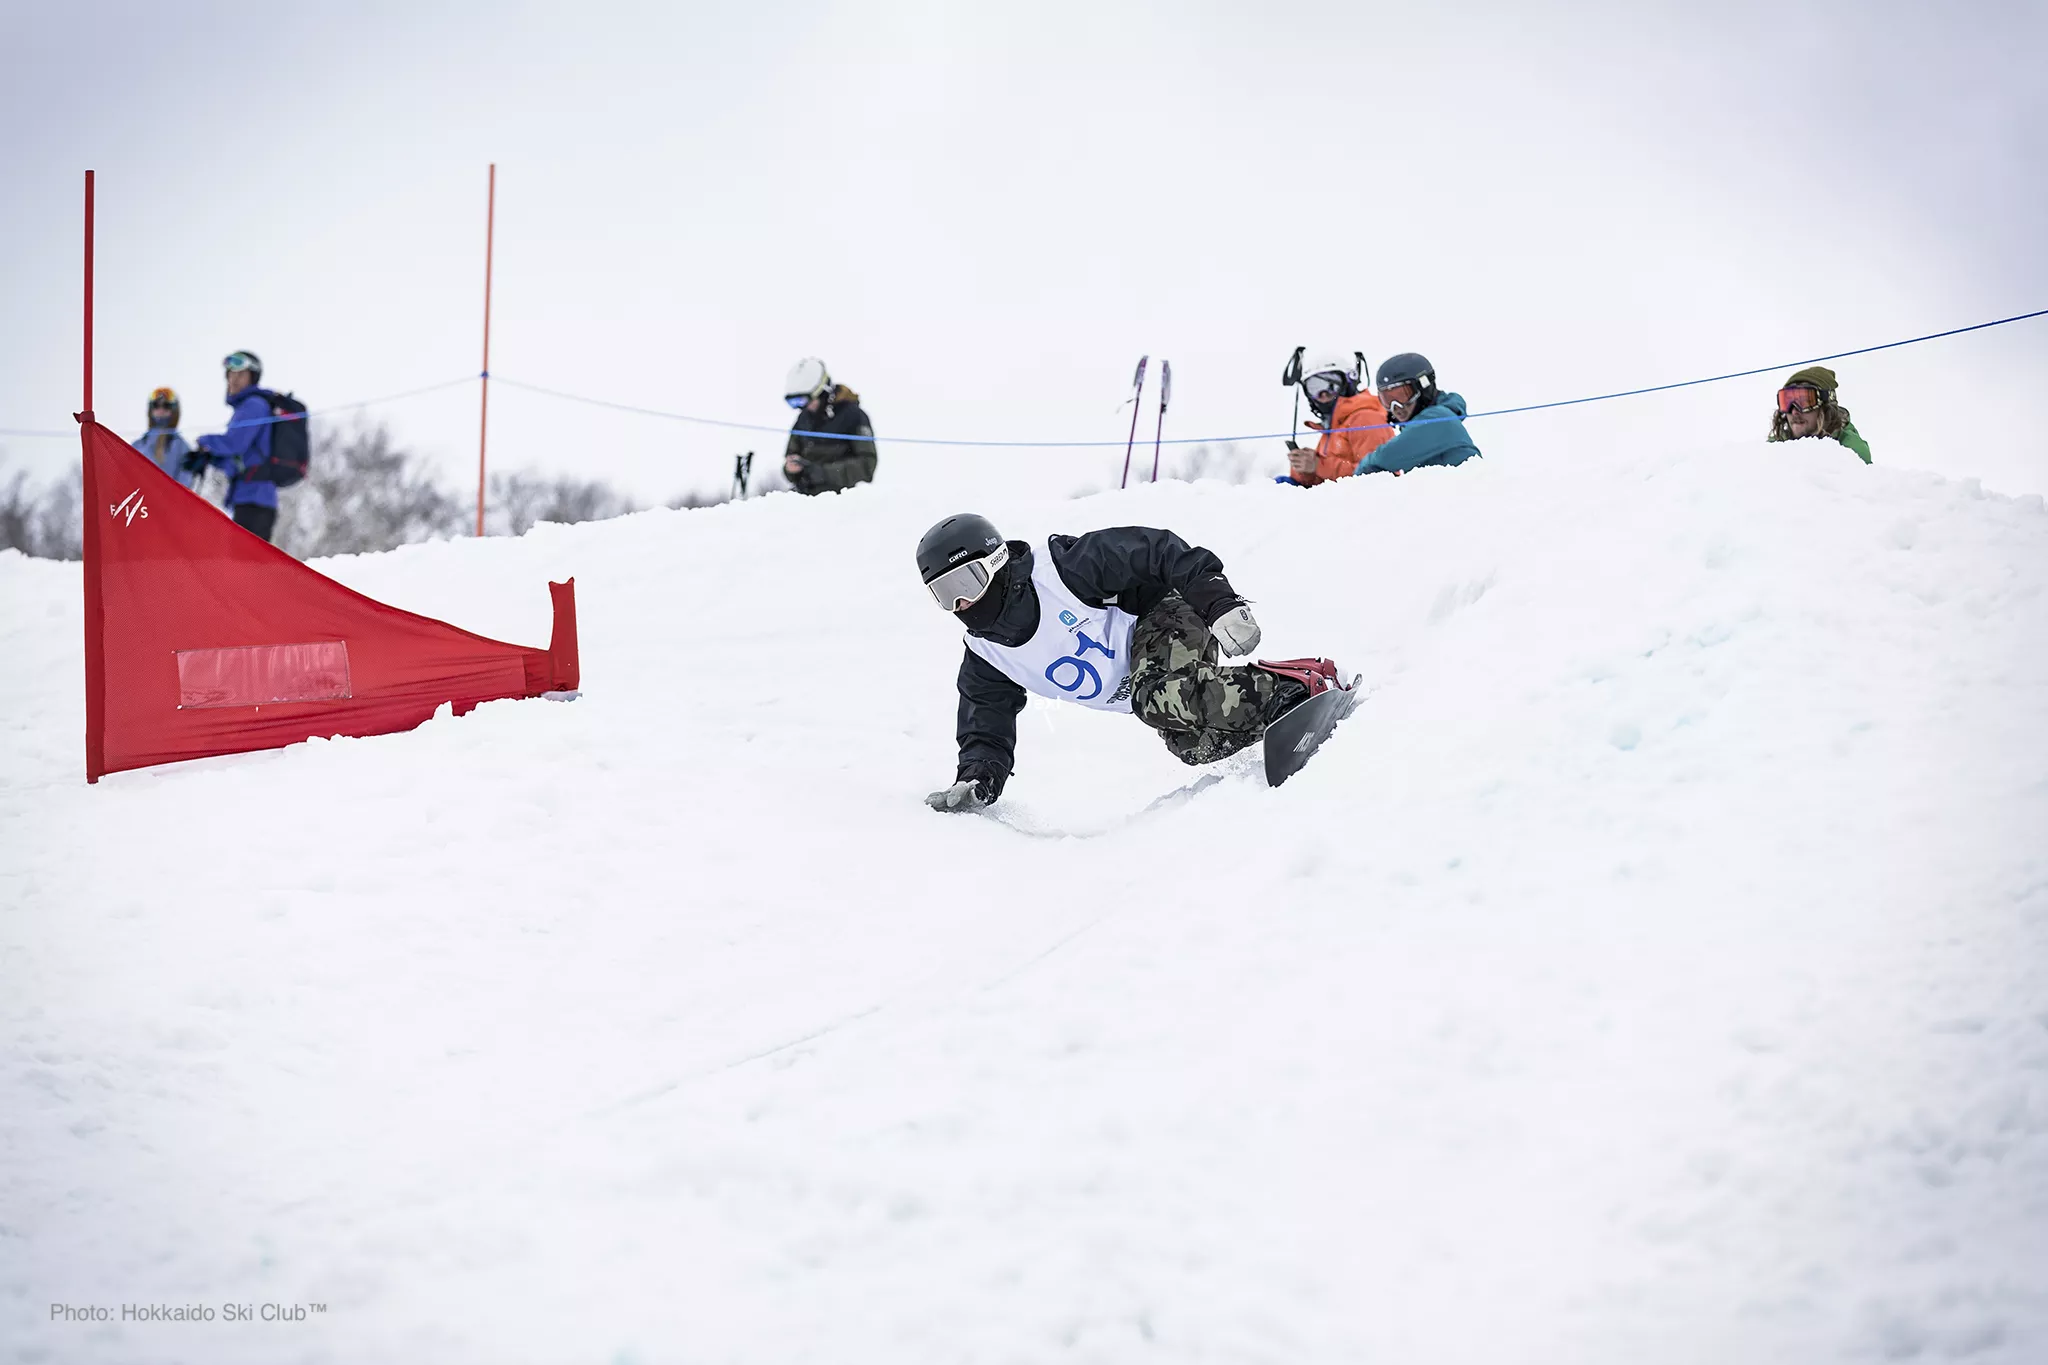 Hokkaido Ski Club in Japan, East Asia | Snowboarding,Skiing - Rated 0.9